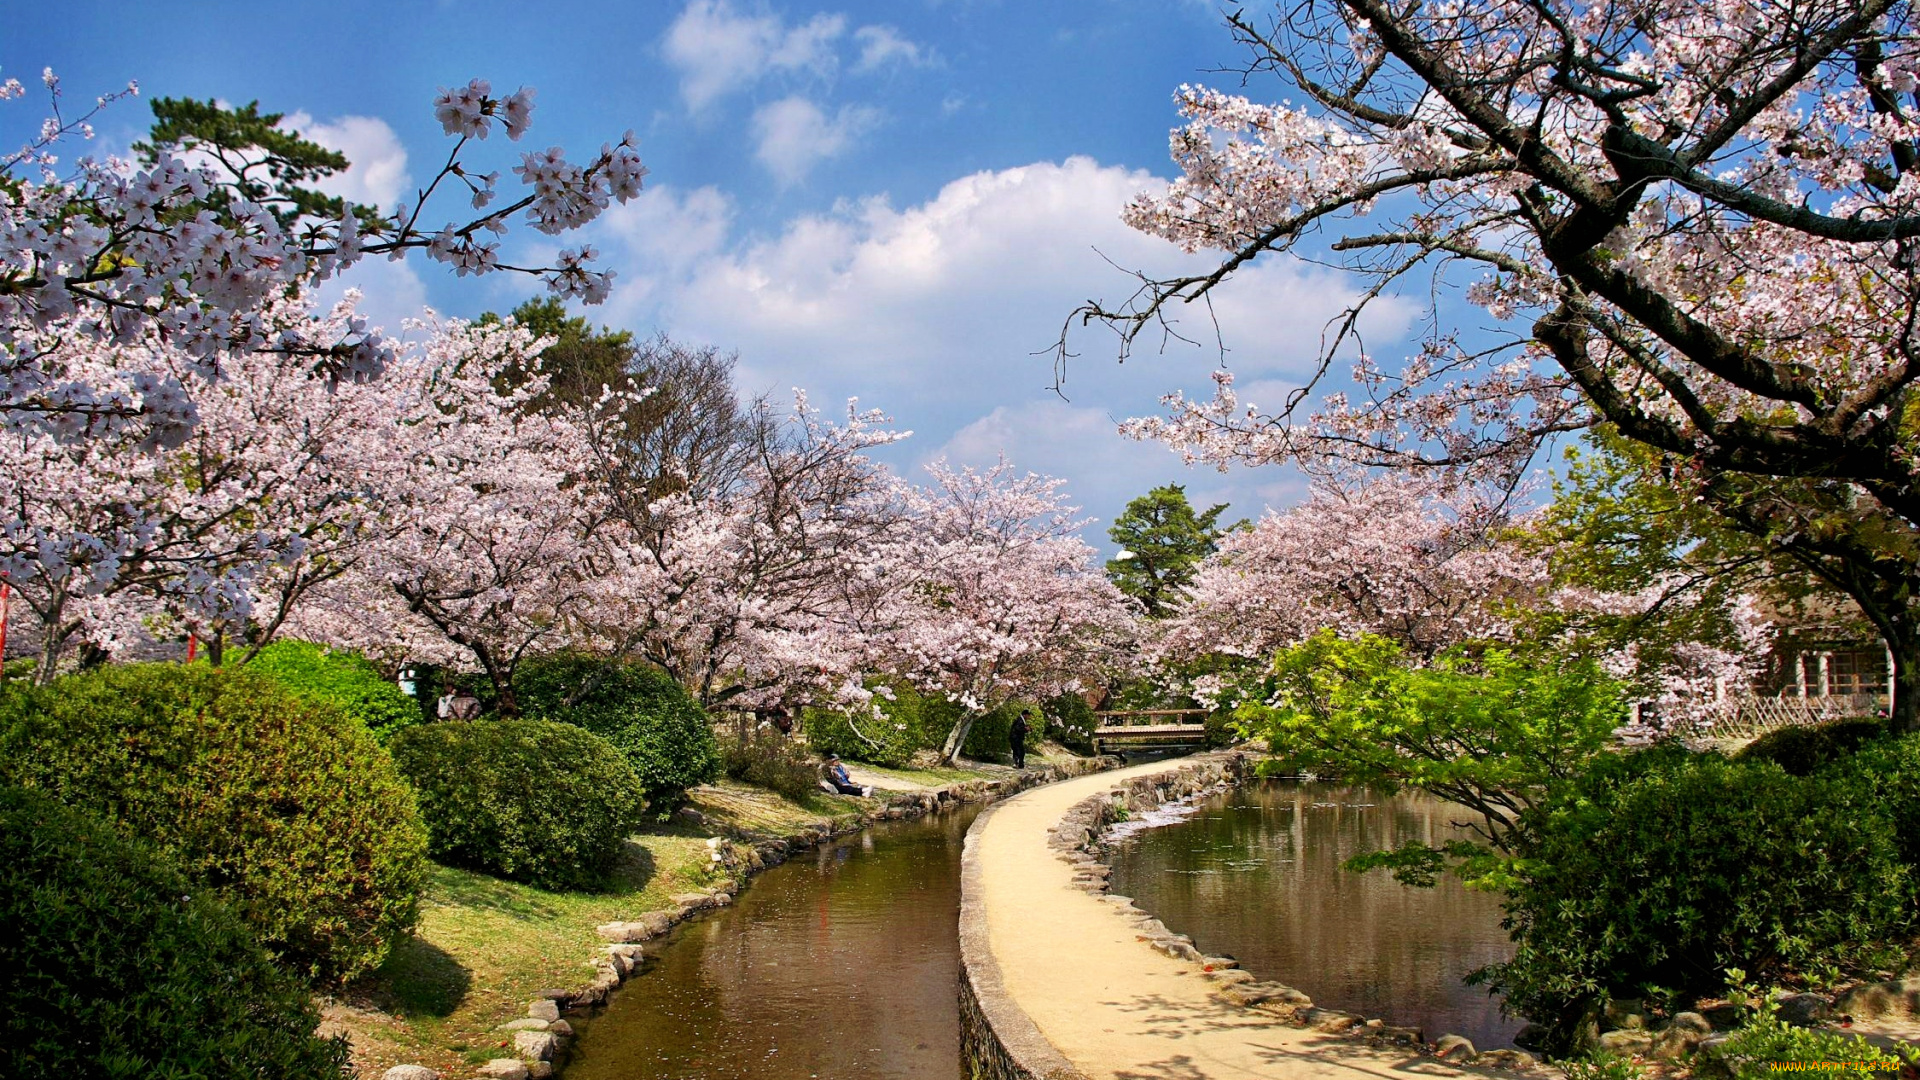 природа, парк, деревья, цветущая, сакура, канал, пруд